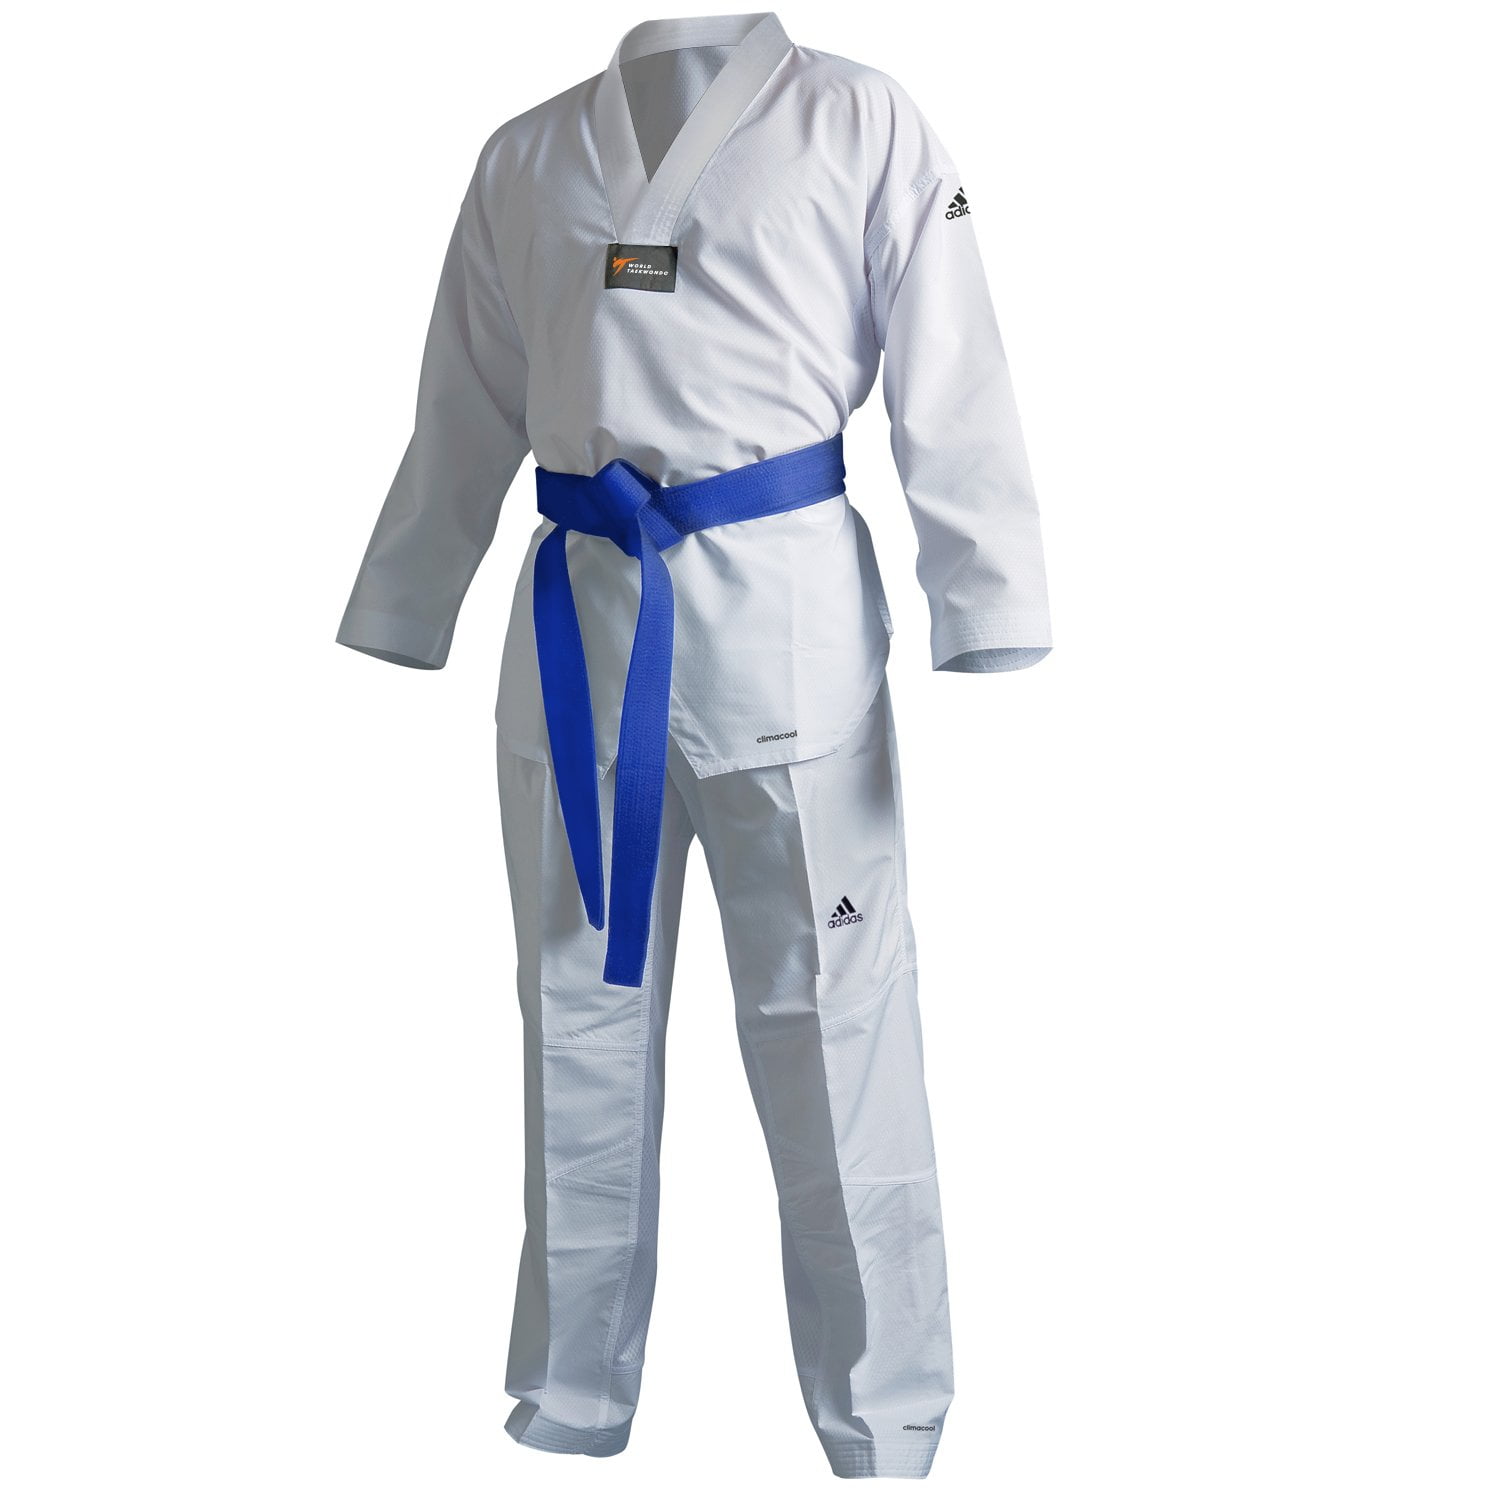 Taekwondo Eco Uniform WT Approved 100% Ultralight - White V-Neck - (8) - Walmart.com